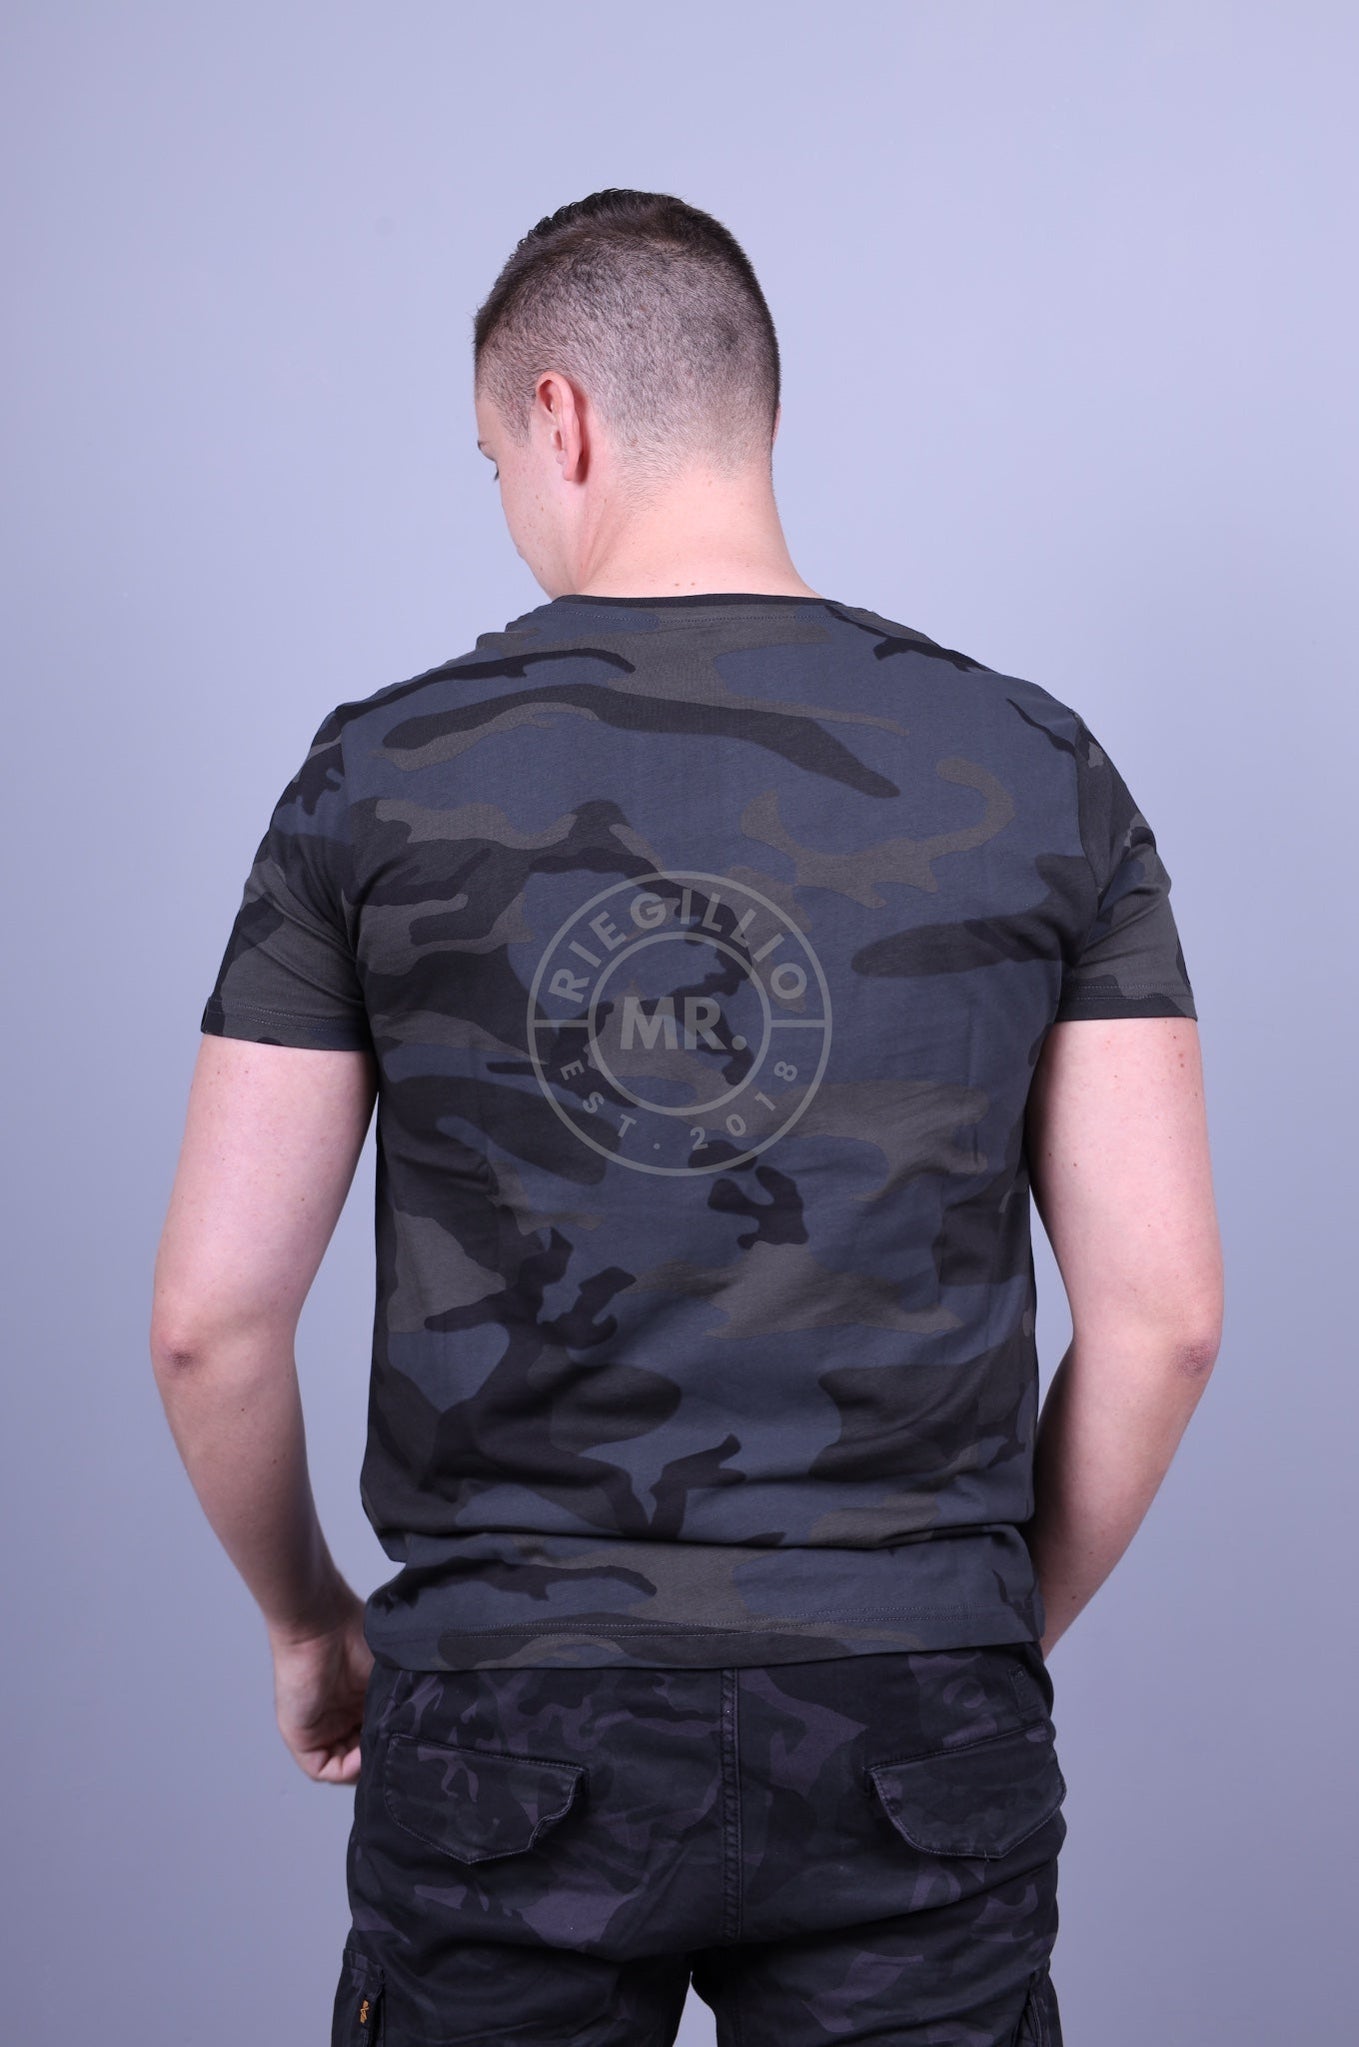 Basic Industries Camo Black Riegillio T-Shirt at MR. Alpha